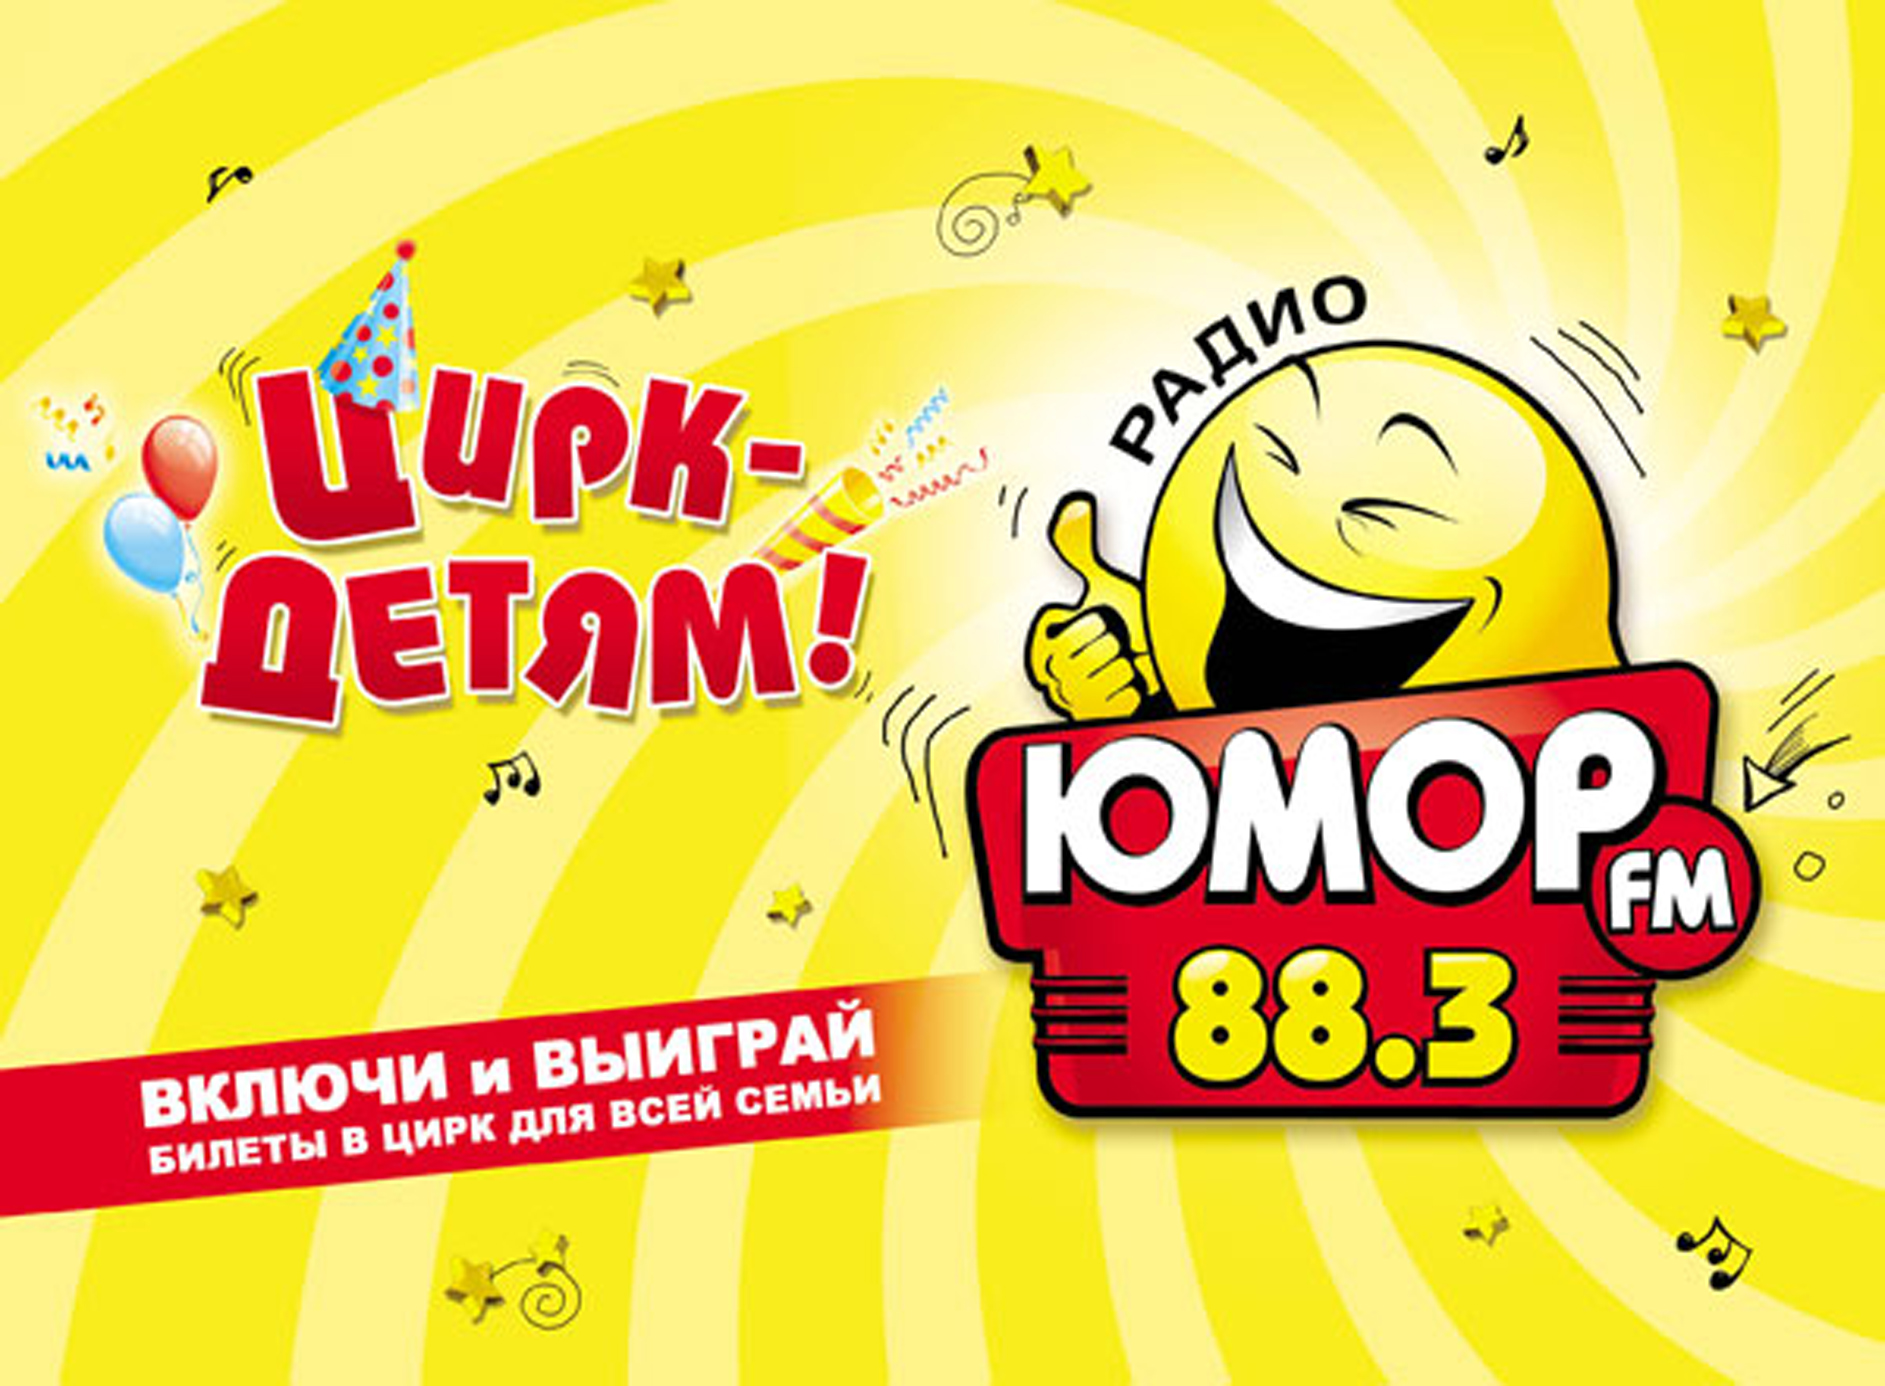 Юмор фм телефон эфира. Юмор fm. Юмор ФМ логотип. Радио юмор ФМ. Юмор fm Москва.